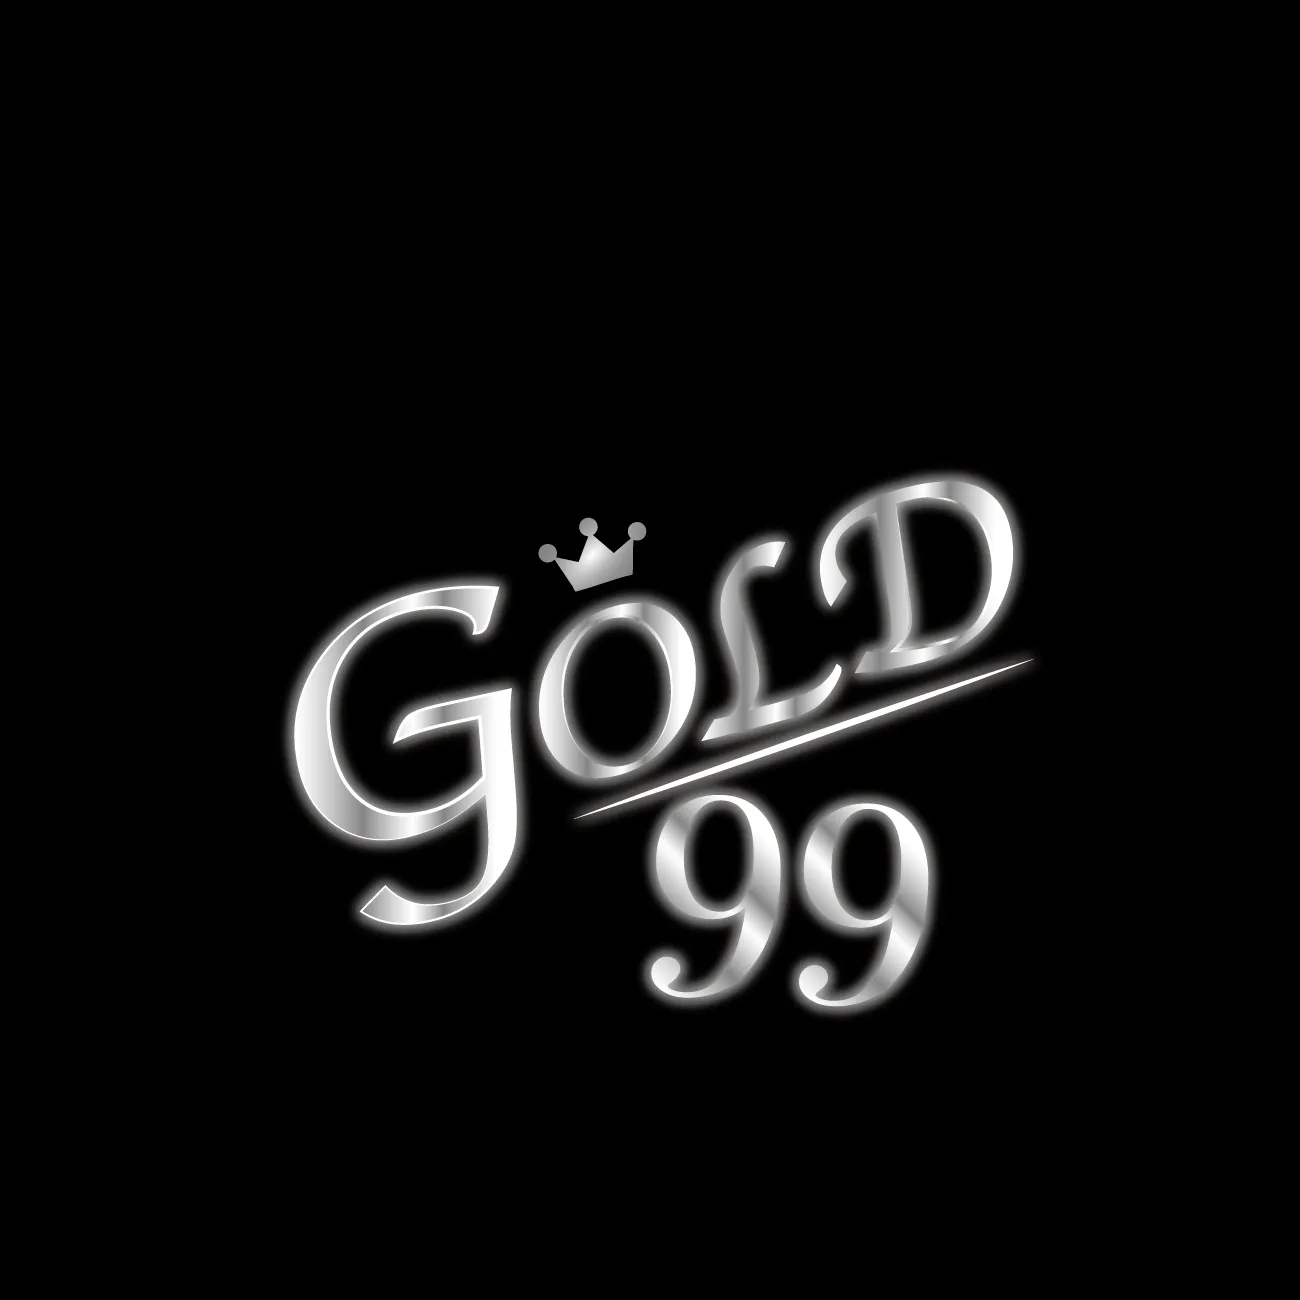 gold999